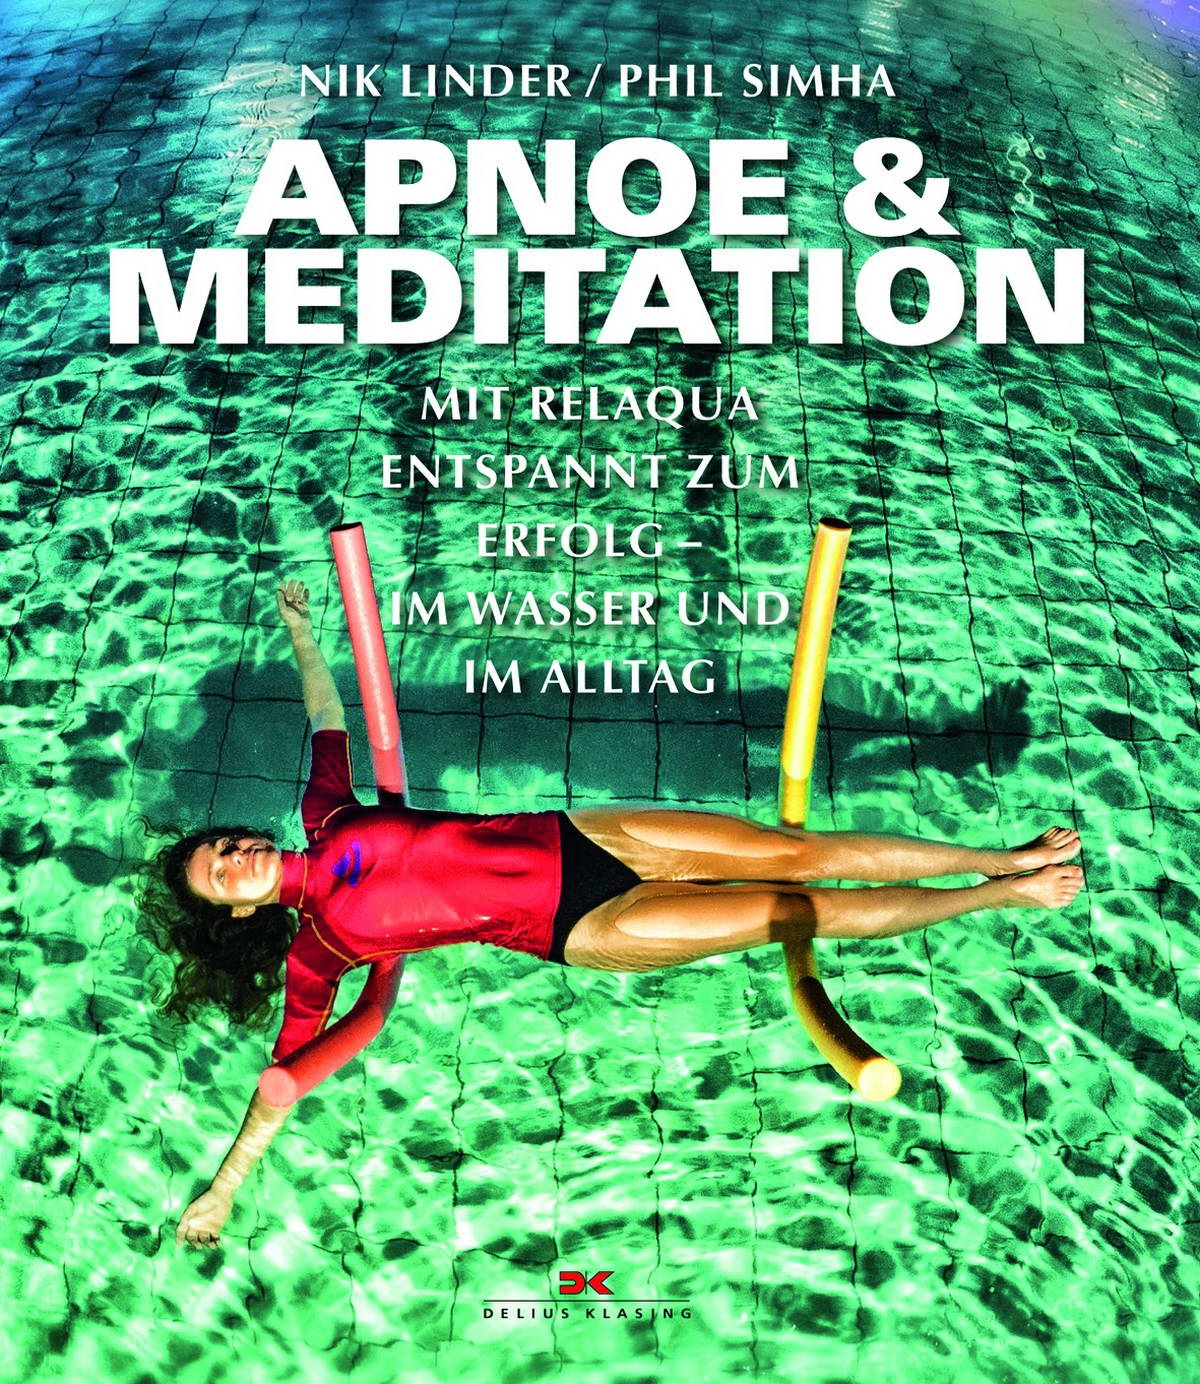 Apnoe & Meditation_9783667109590_Cover_Bildgröße ändern (c) The book by Nik Linder & Phil Simha